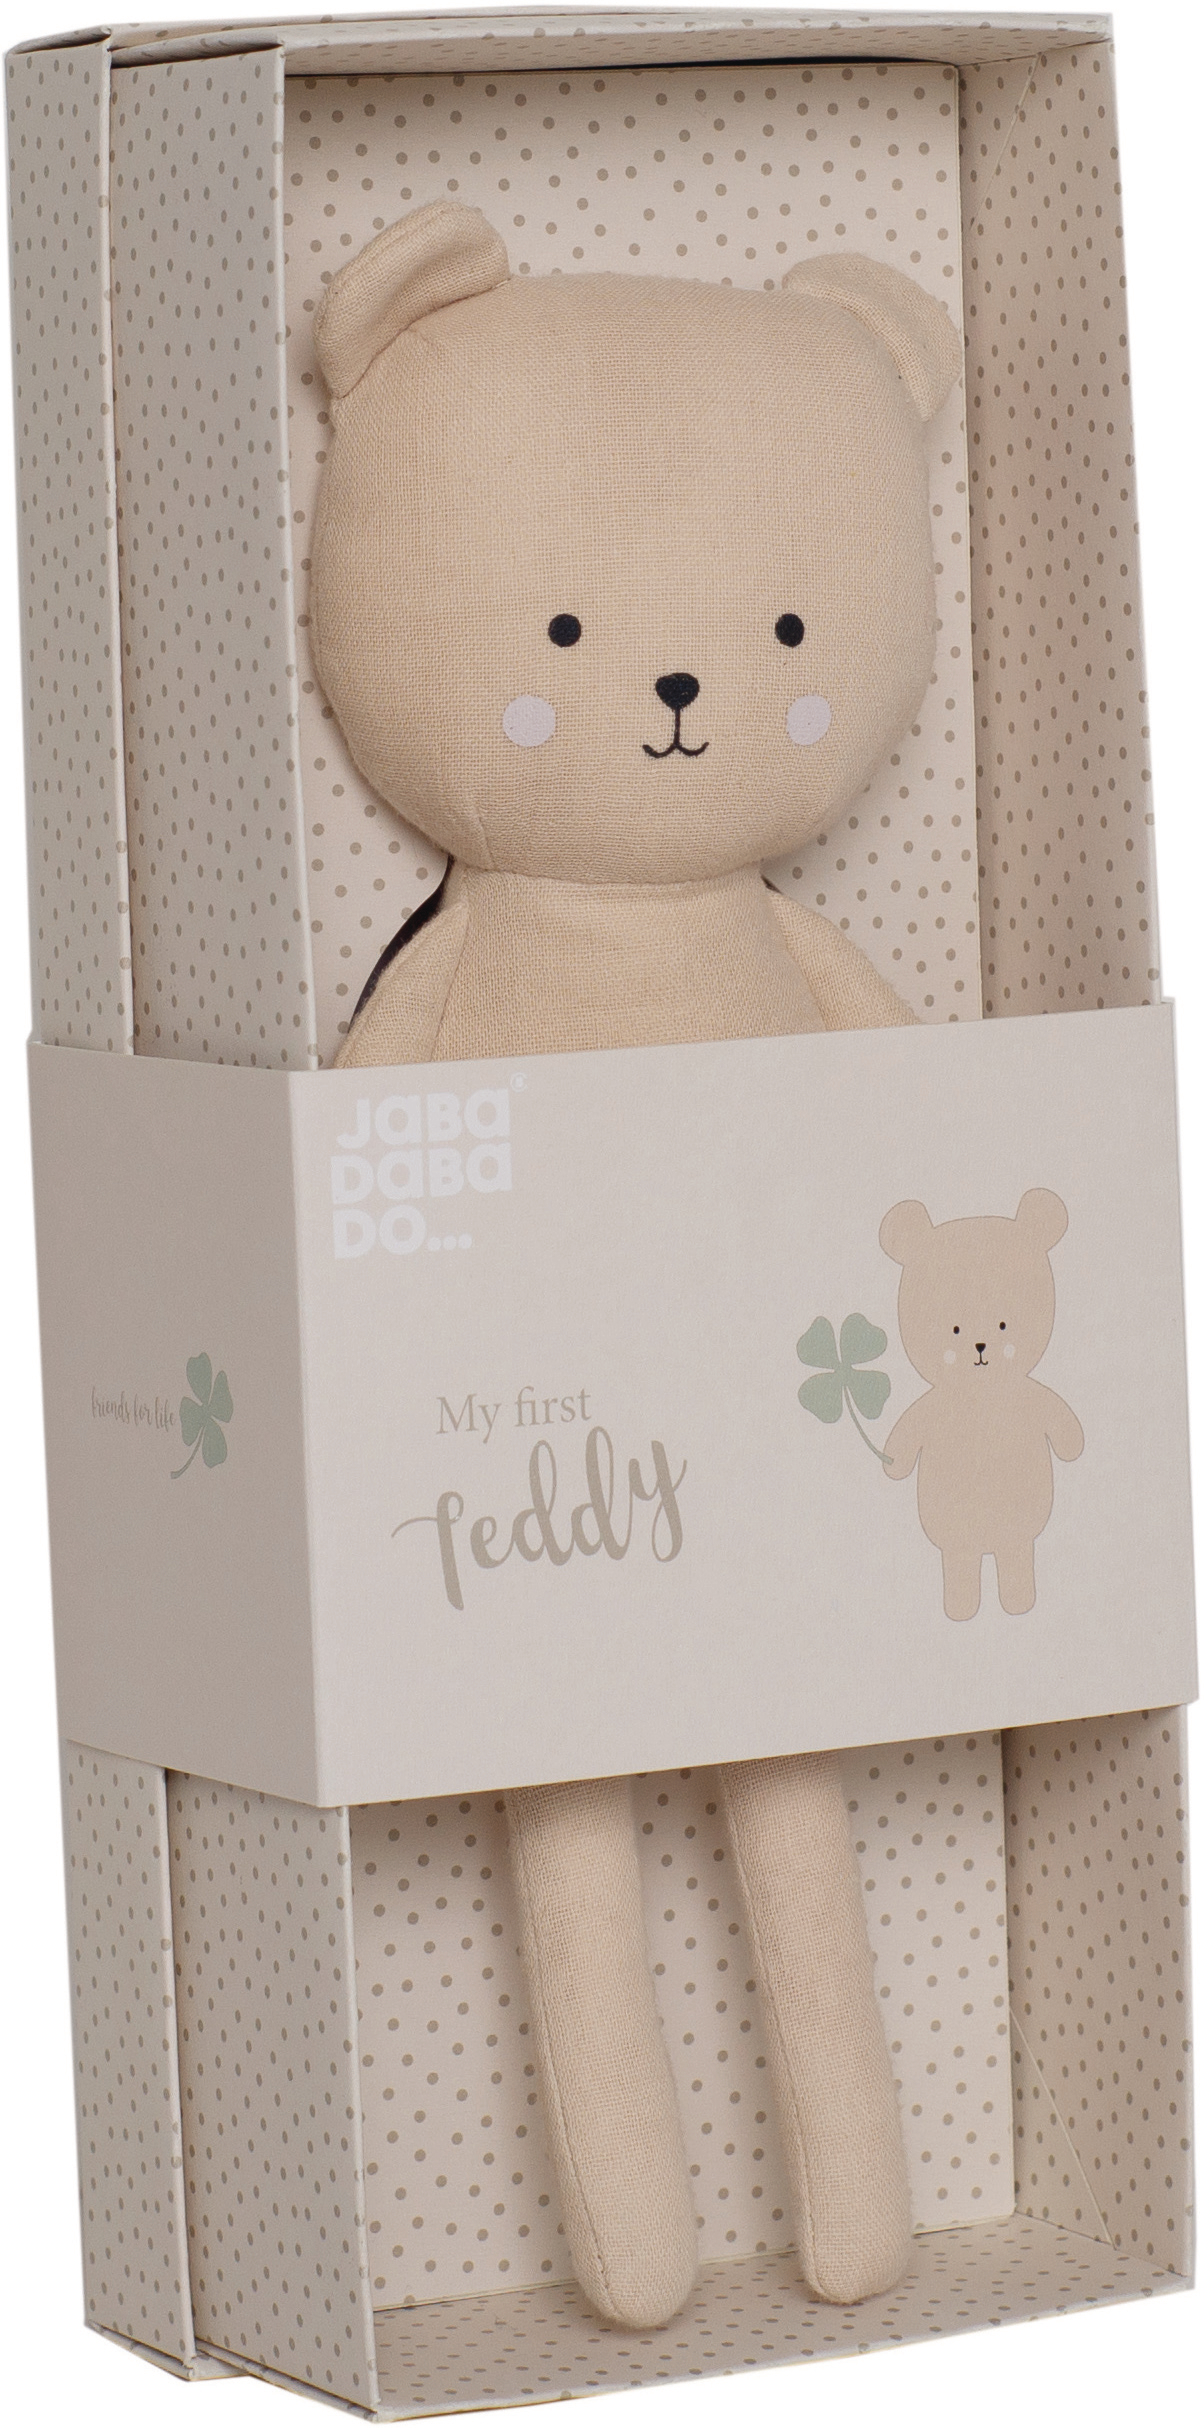 JABADABADO Gift box Buddy Teddy N0185